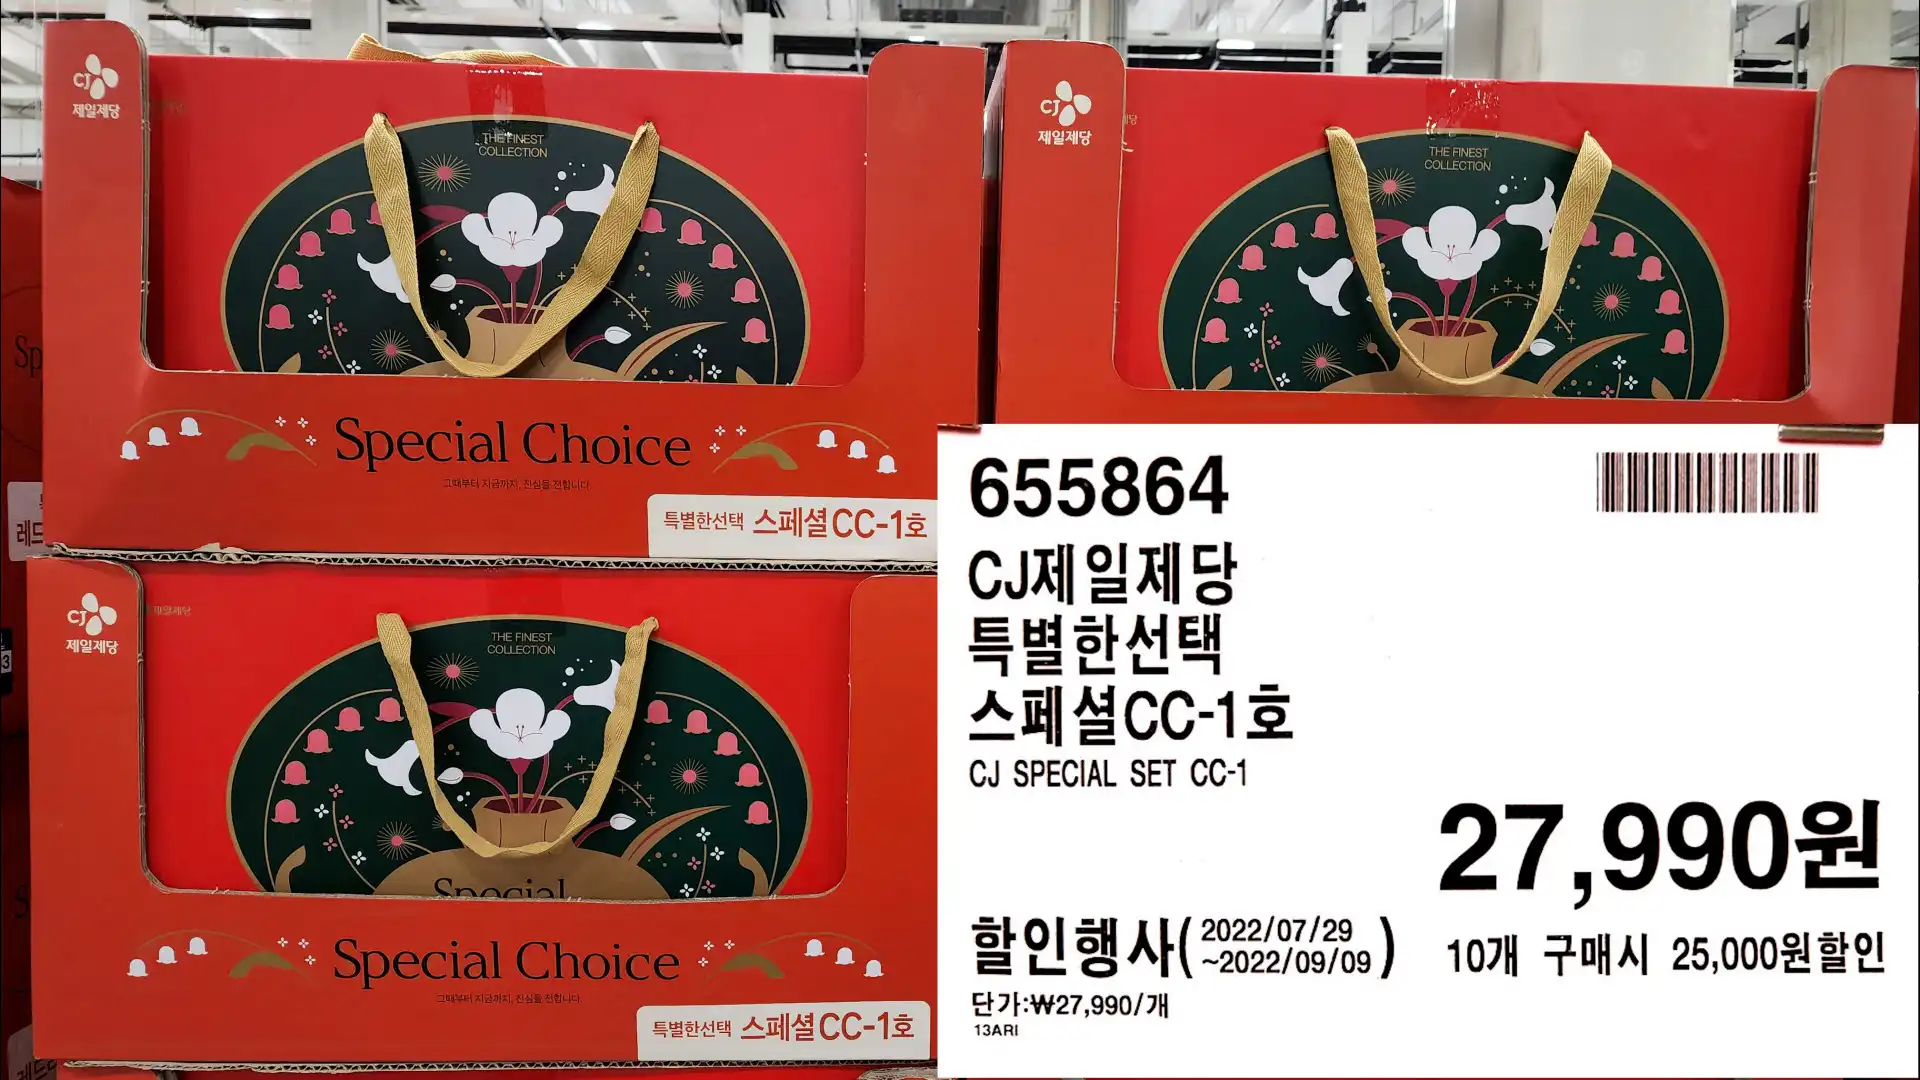 CJ제일제당
특별한선택
스페셜CC-1호
CJ SPECIAL SET CC-1
27&#44;990원
10개 구매시 25&#44;000원할인